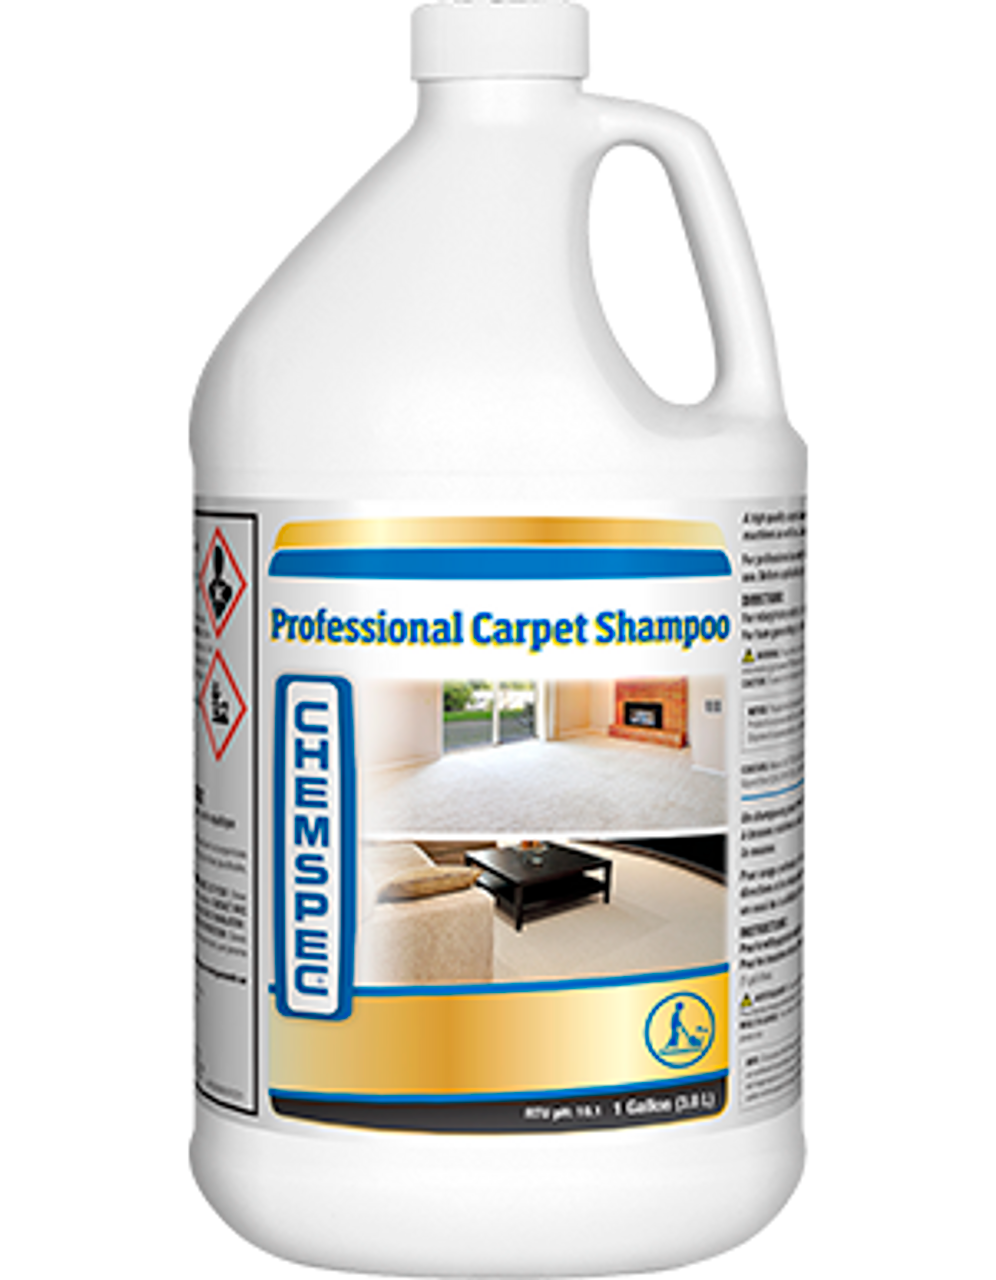 Professional Carpet Shampoo